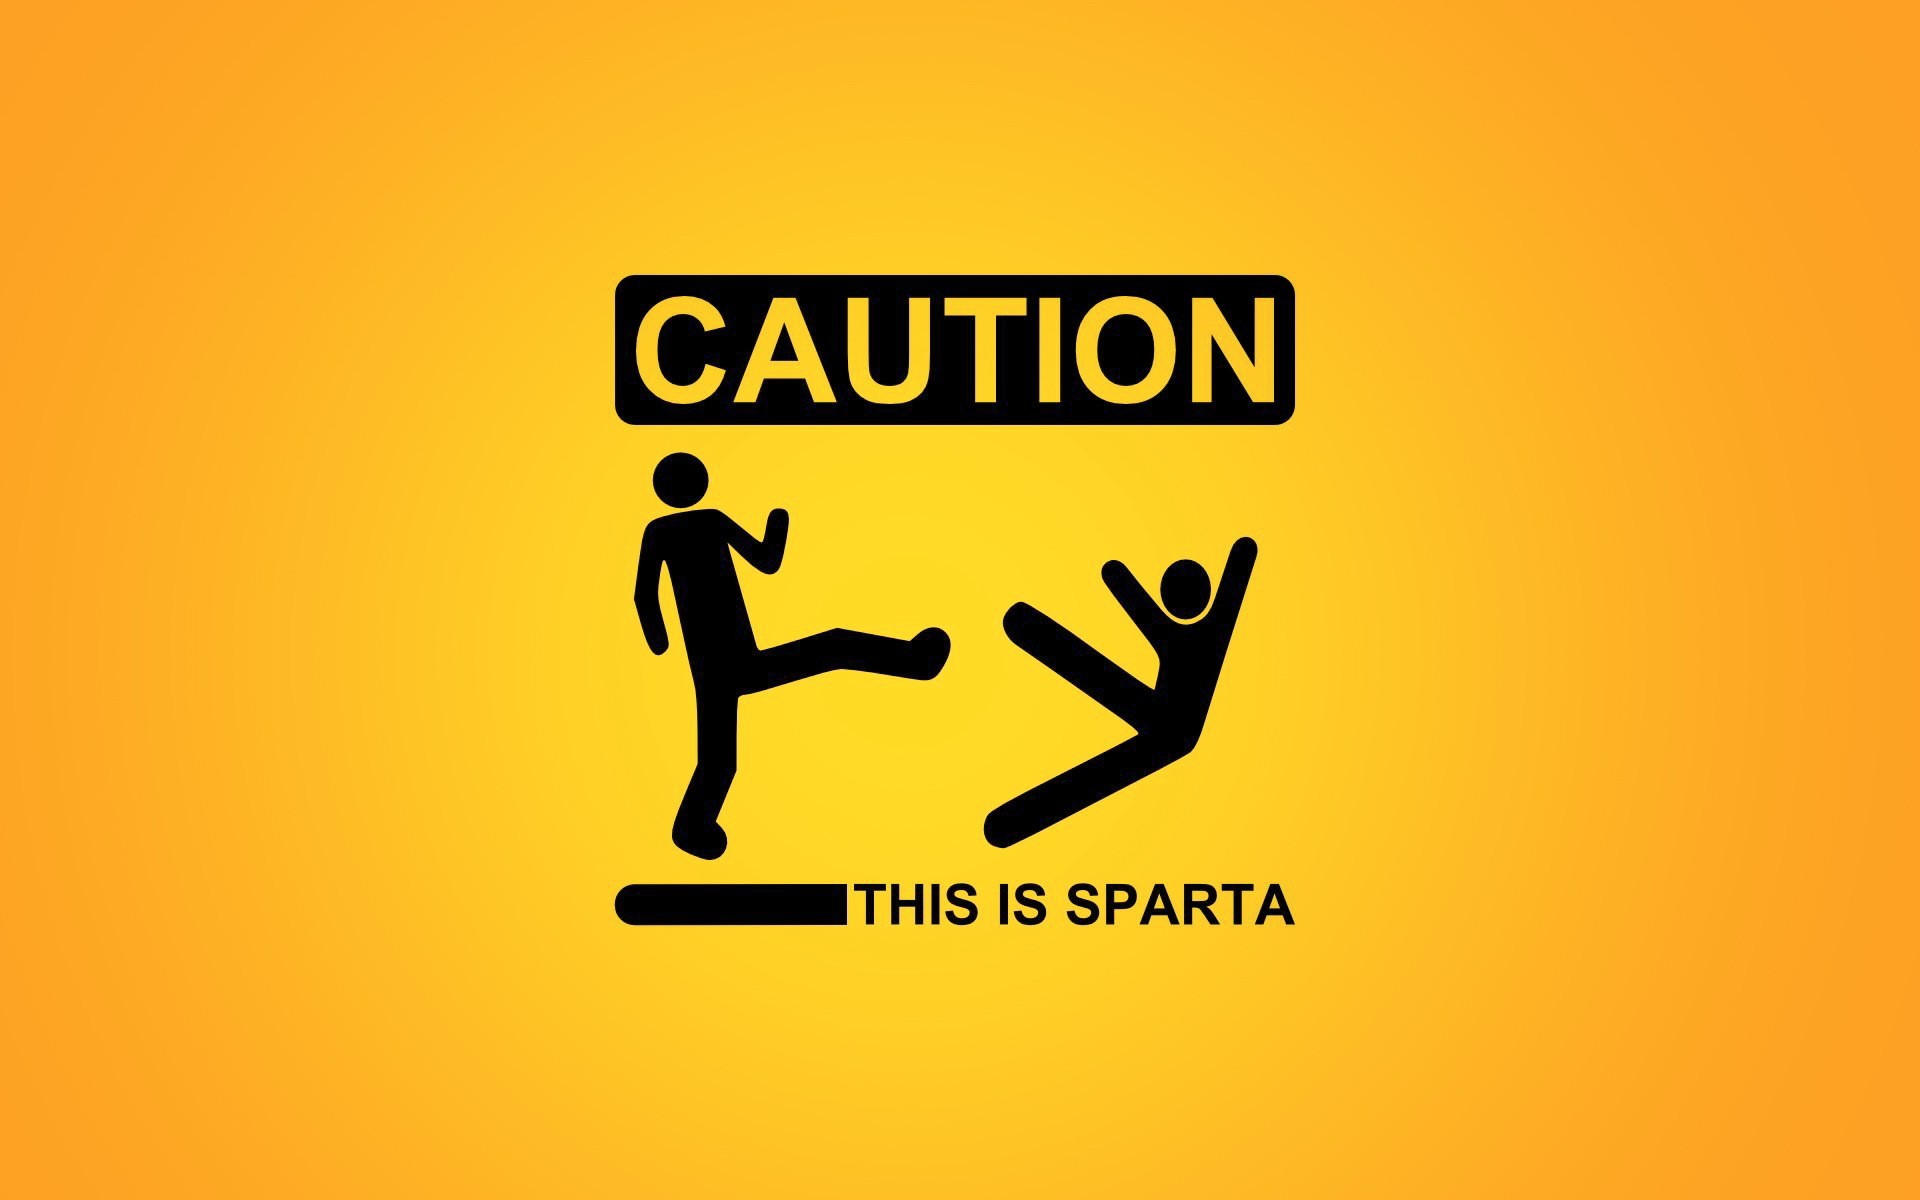 Sparta, funny, warning, caution, stick figures, awesomeness - desktop wallpaper